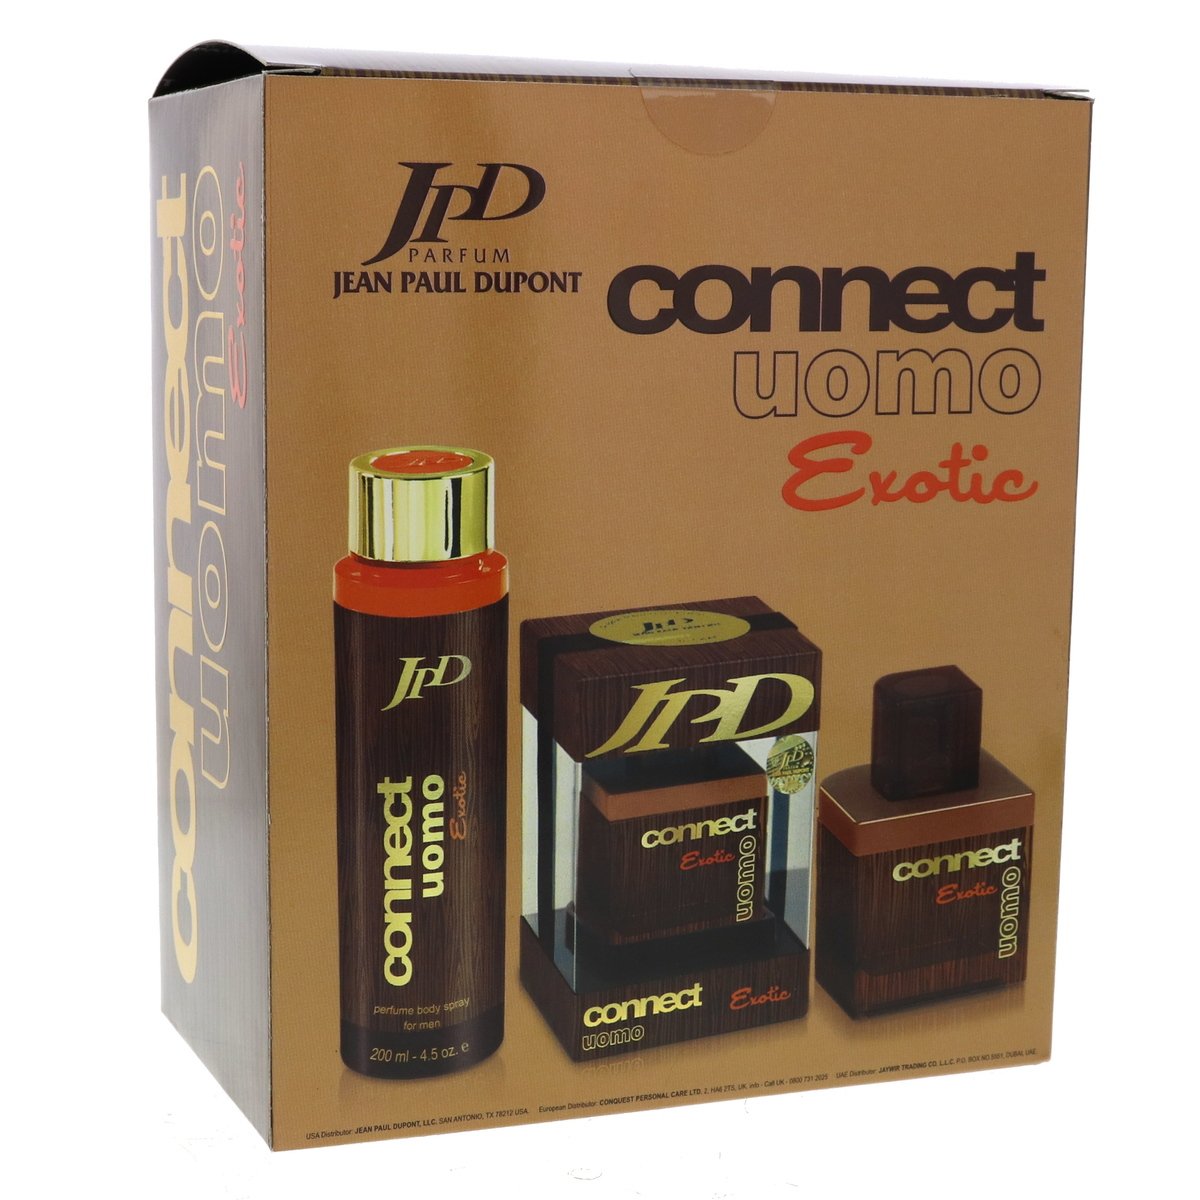 JPD Connect Uomo Exotic 100 ml + Perfume Body Spray For Men 200 ml